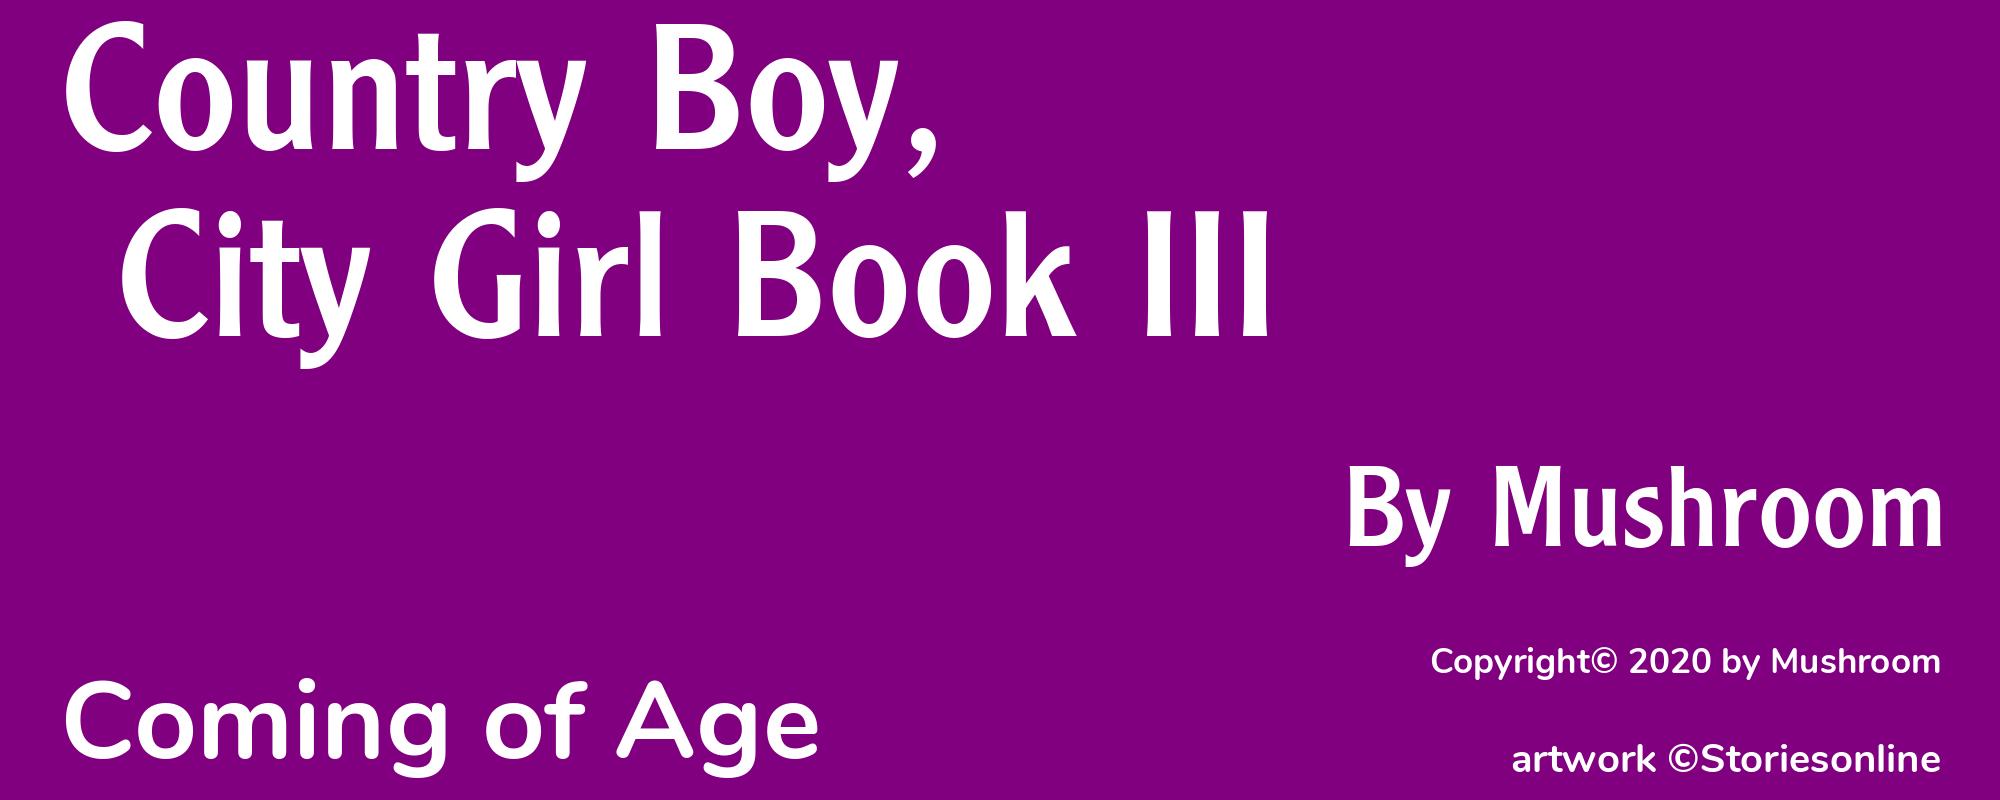 Country Boy, City Girl Book III - Cover